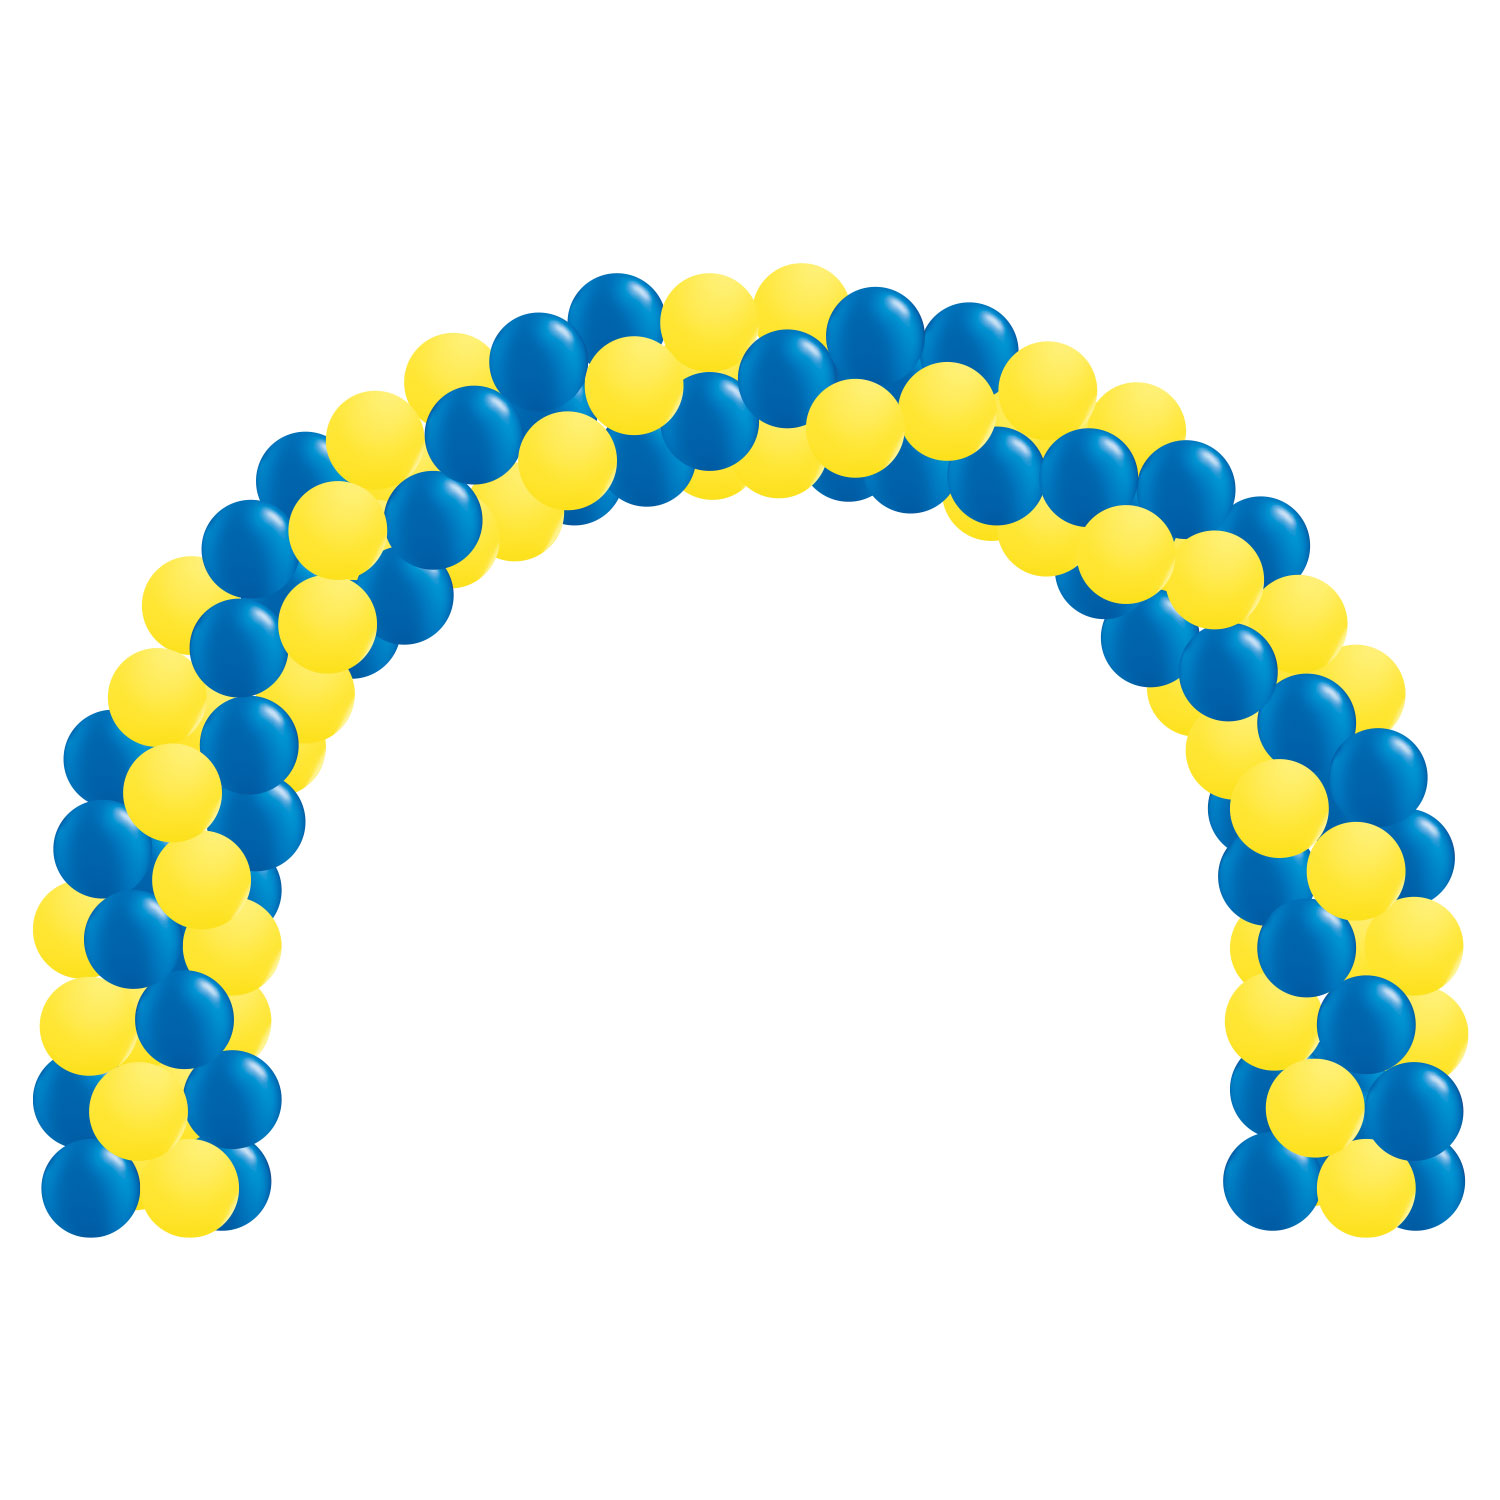 Ballongbåge med gula och blå ballonger